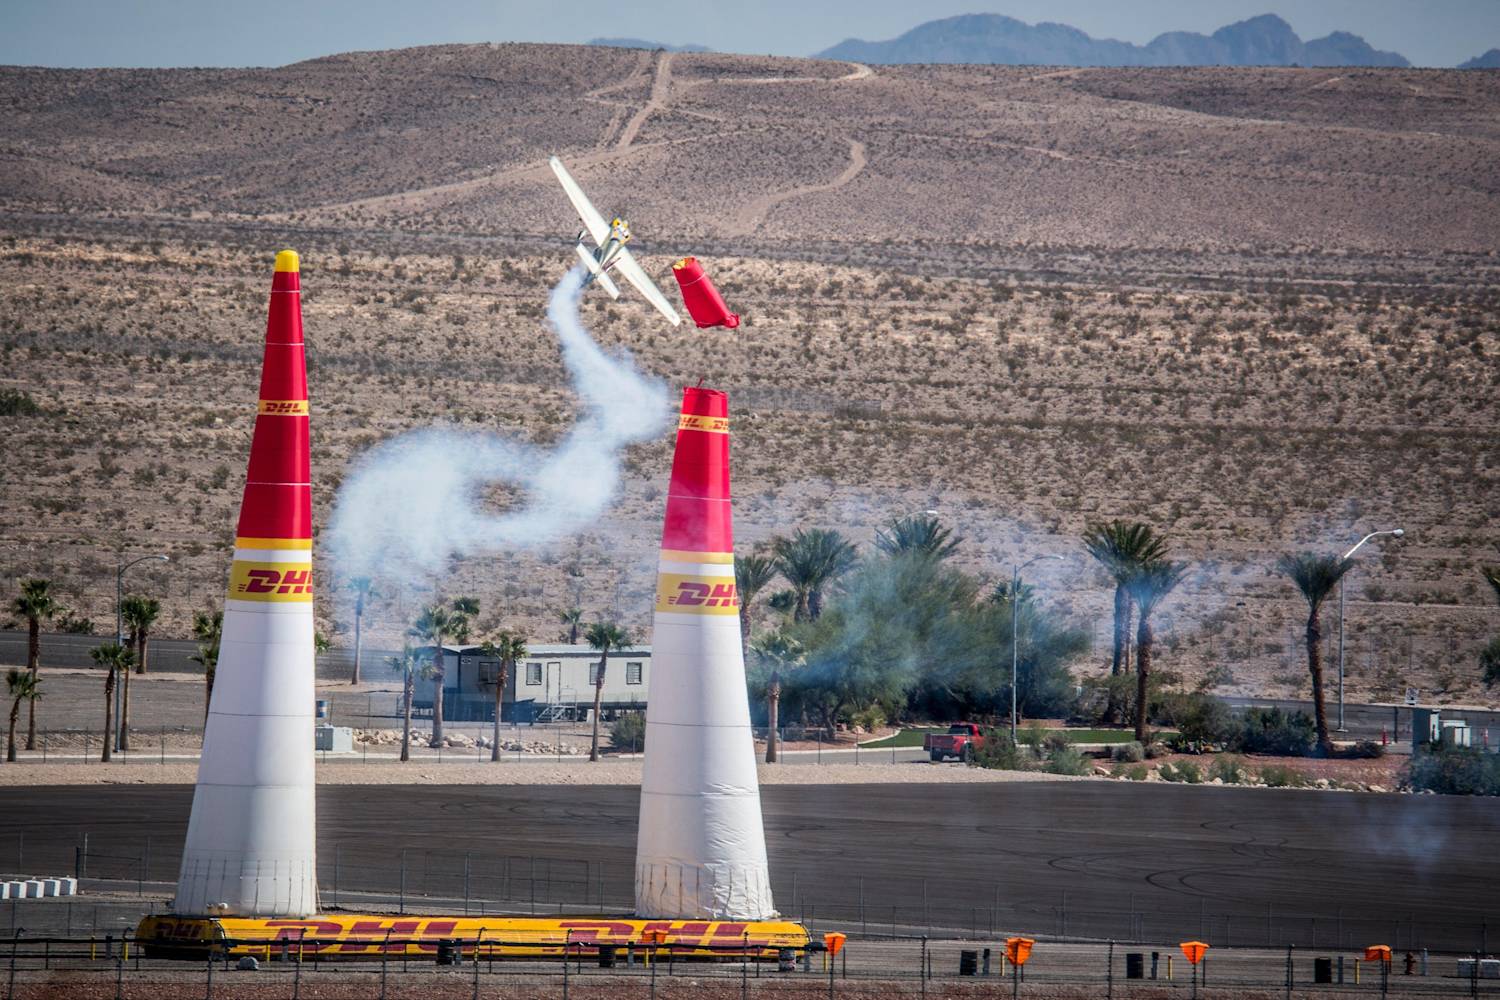 Pylons Red Bull Air Race Techology Las Vegas